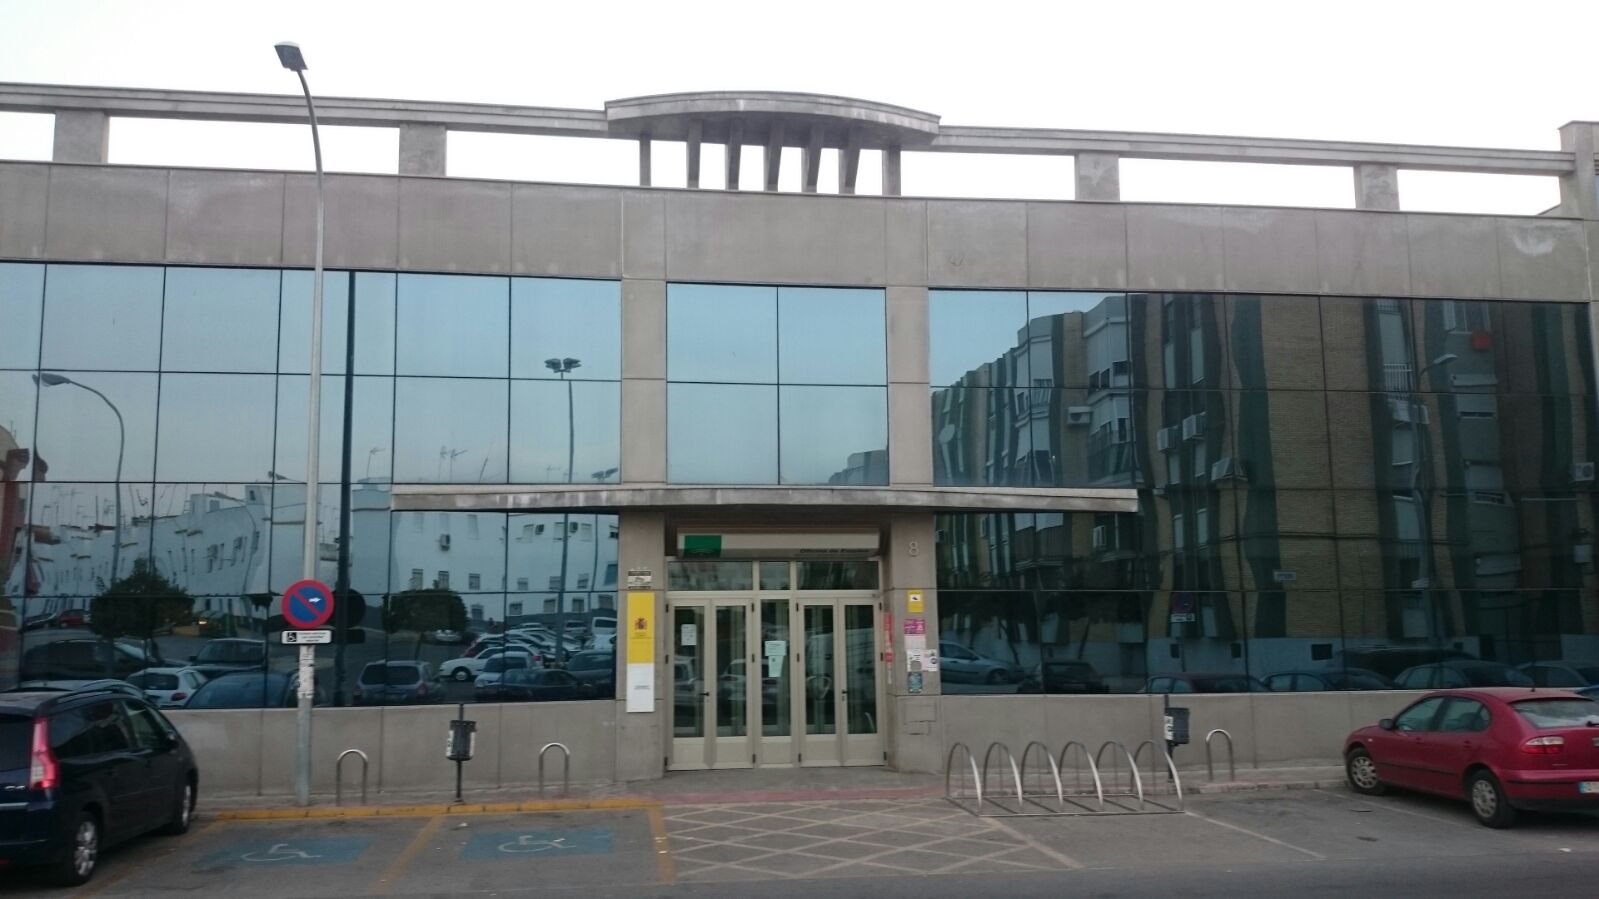 oficina del servicio andaluz de empleo cantely (4)